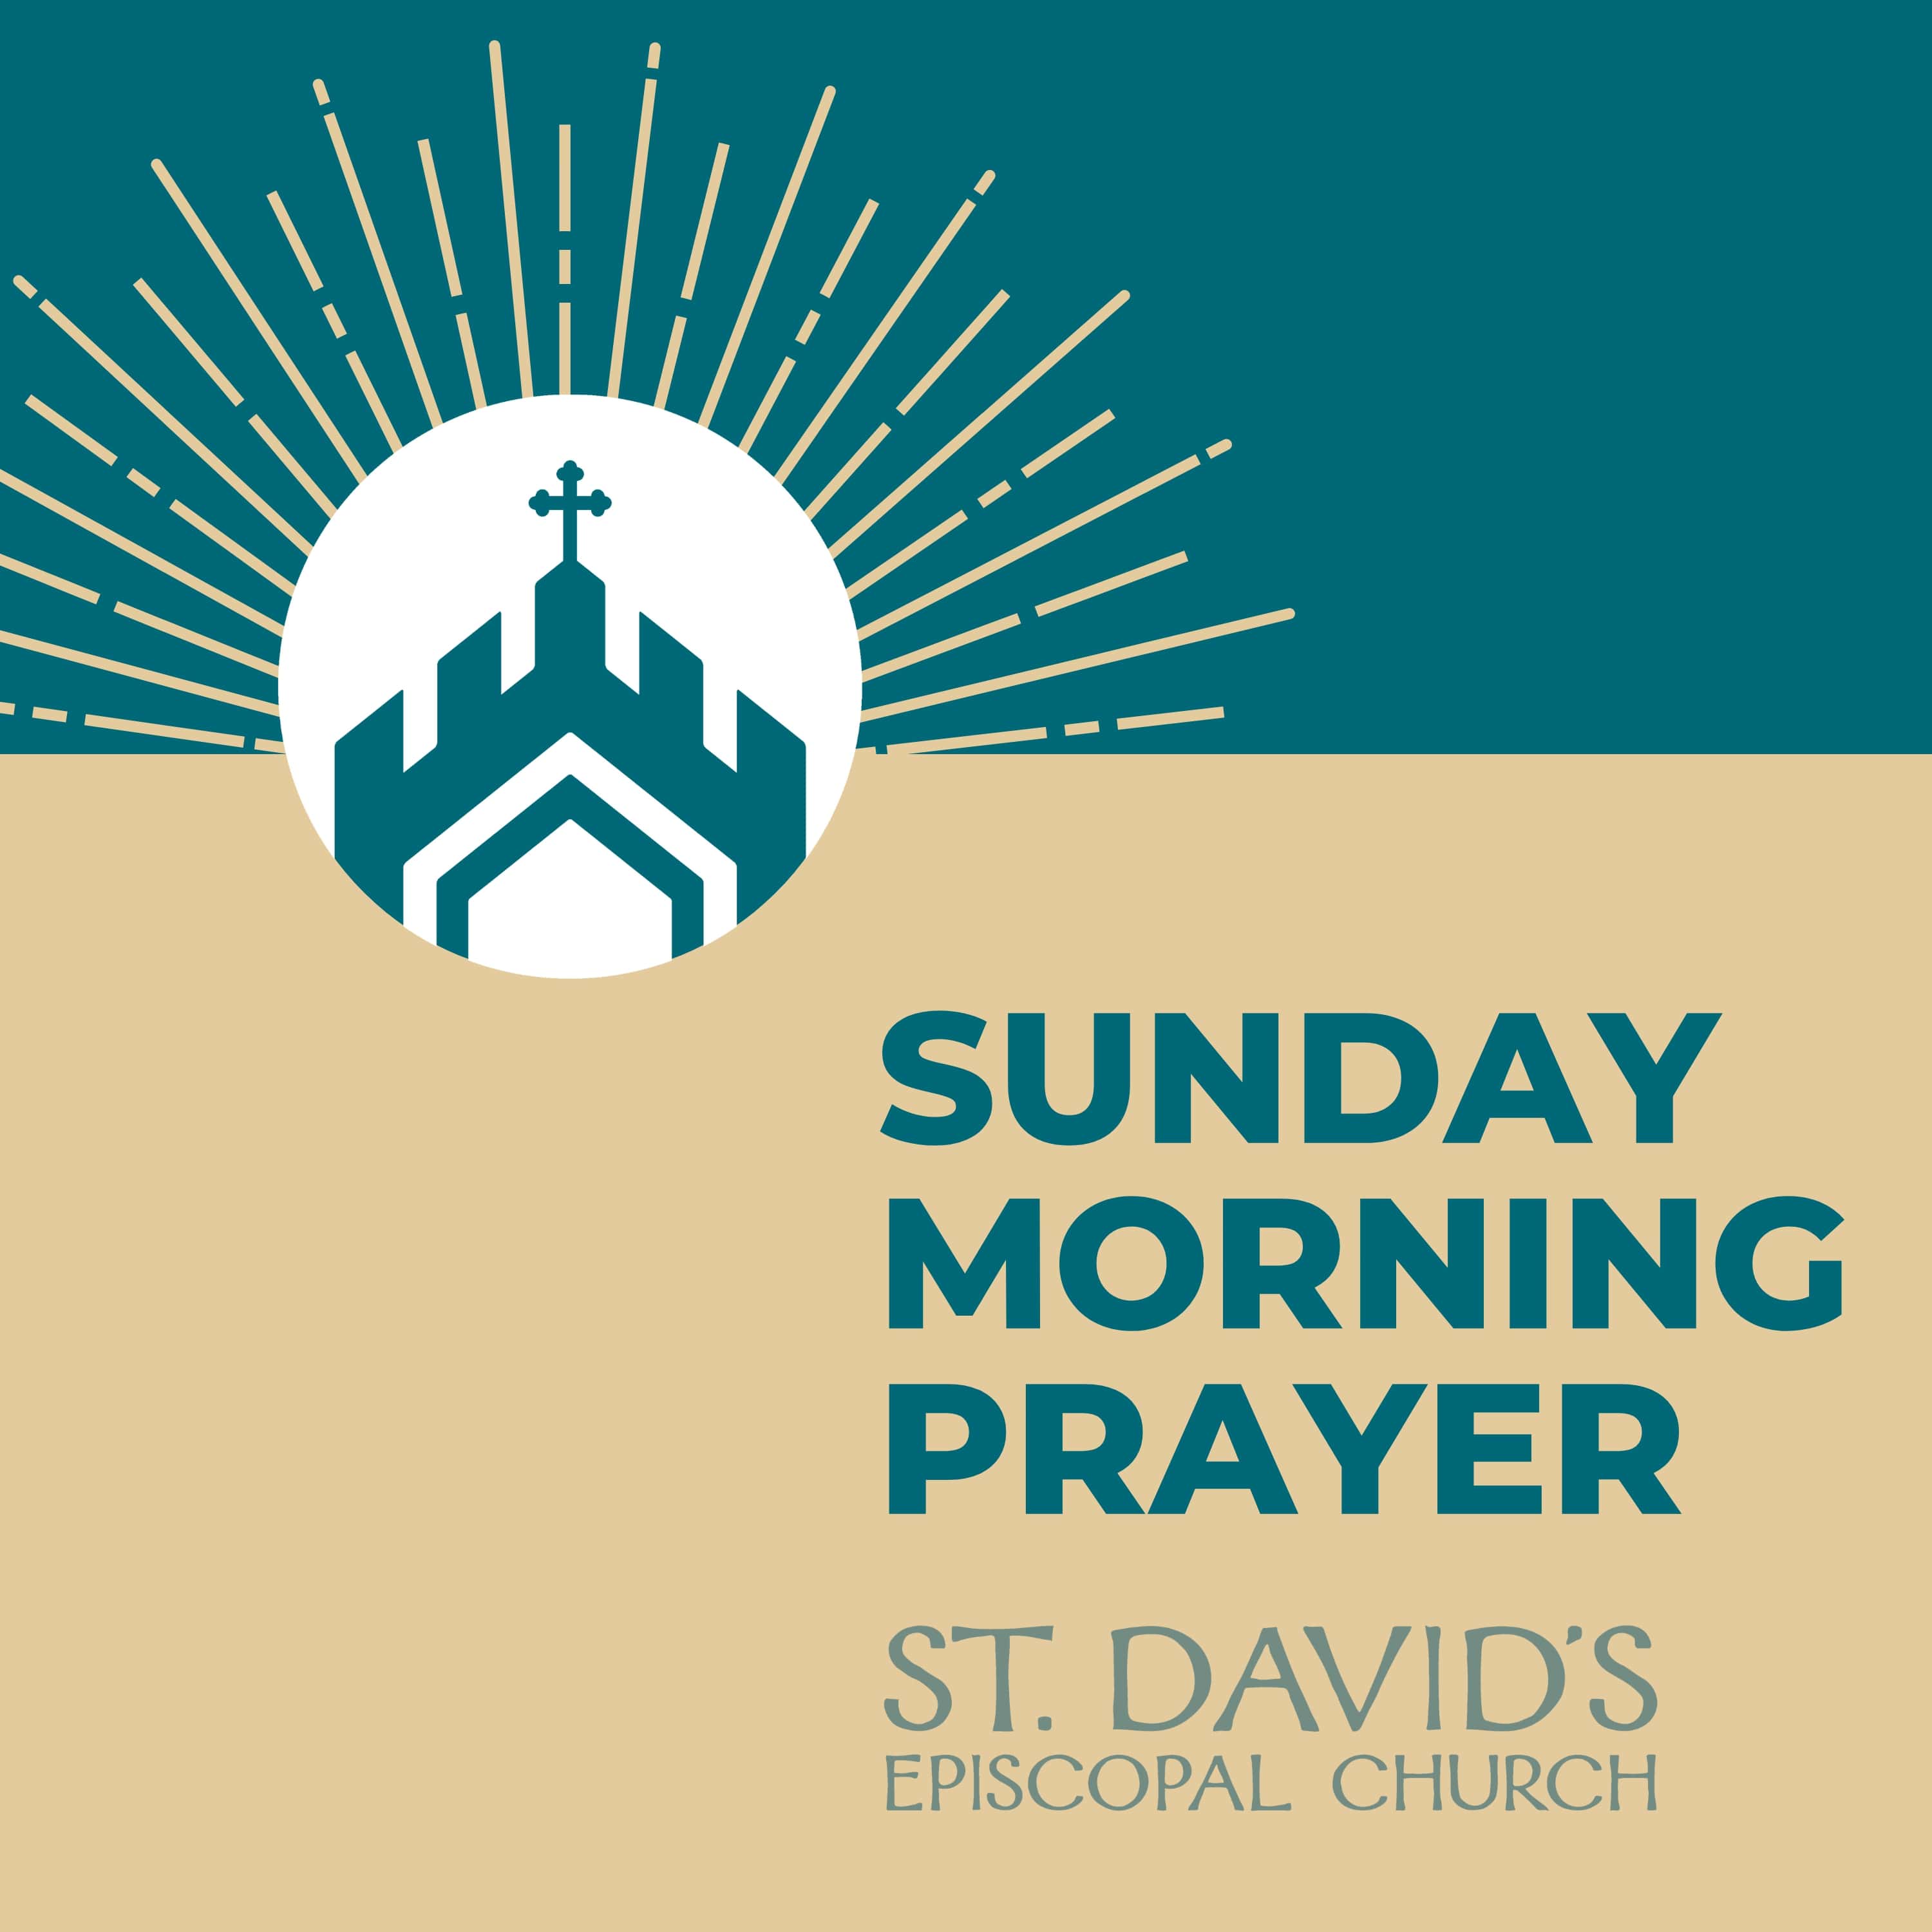 Sunday Morning Prayer: Rite Two, Year 2, 11th Sunday after Pentecost